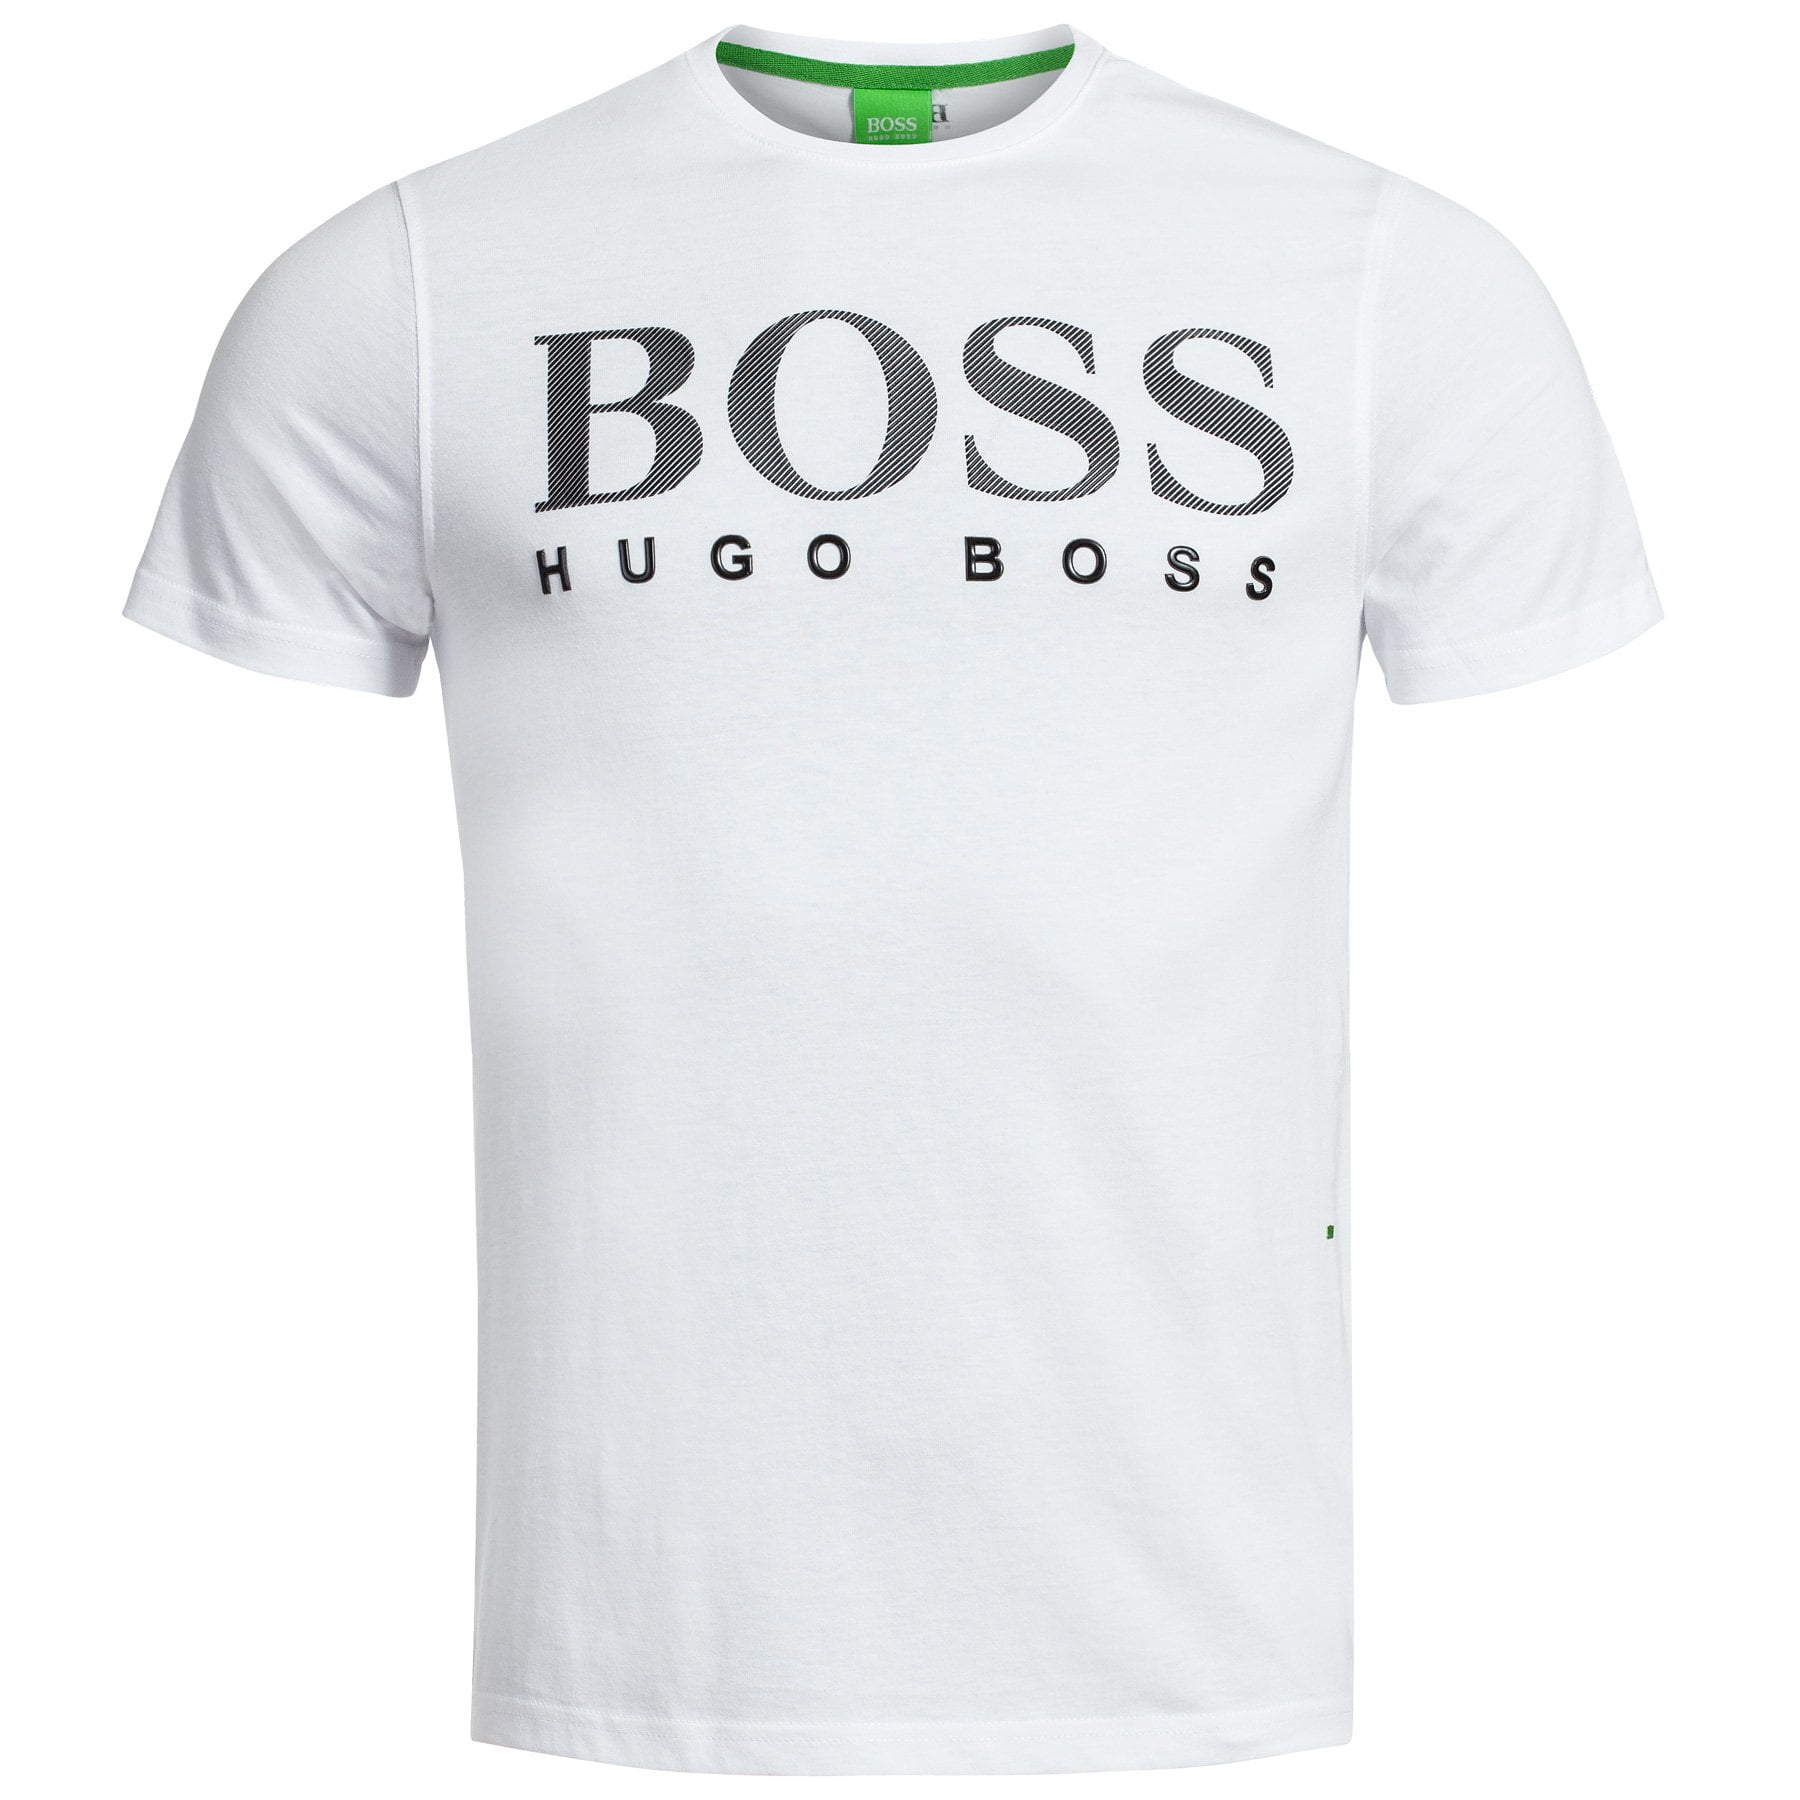 hugo boss clothing prices